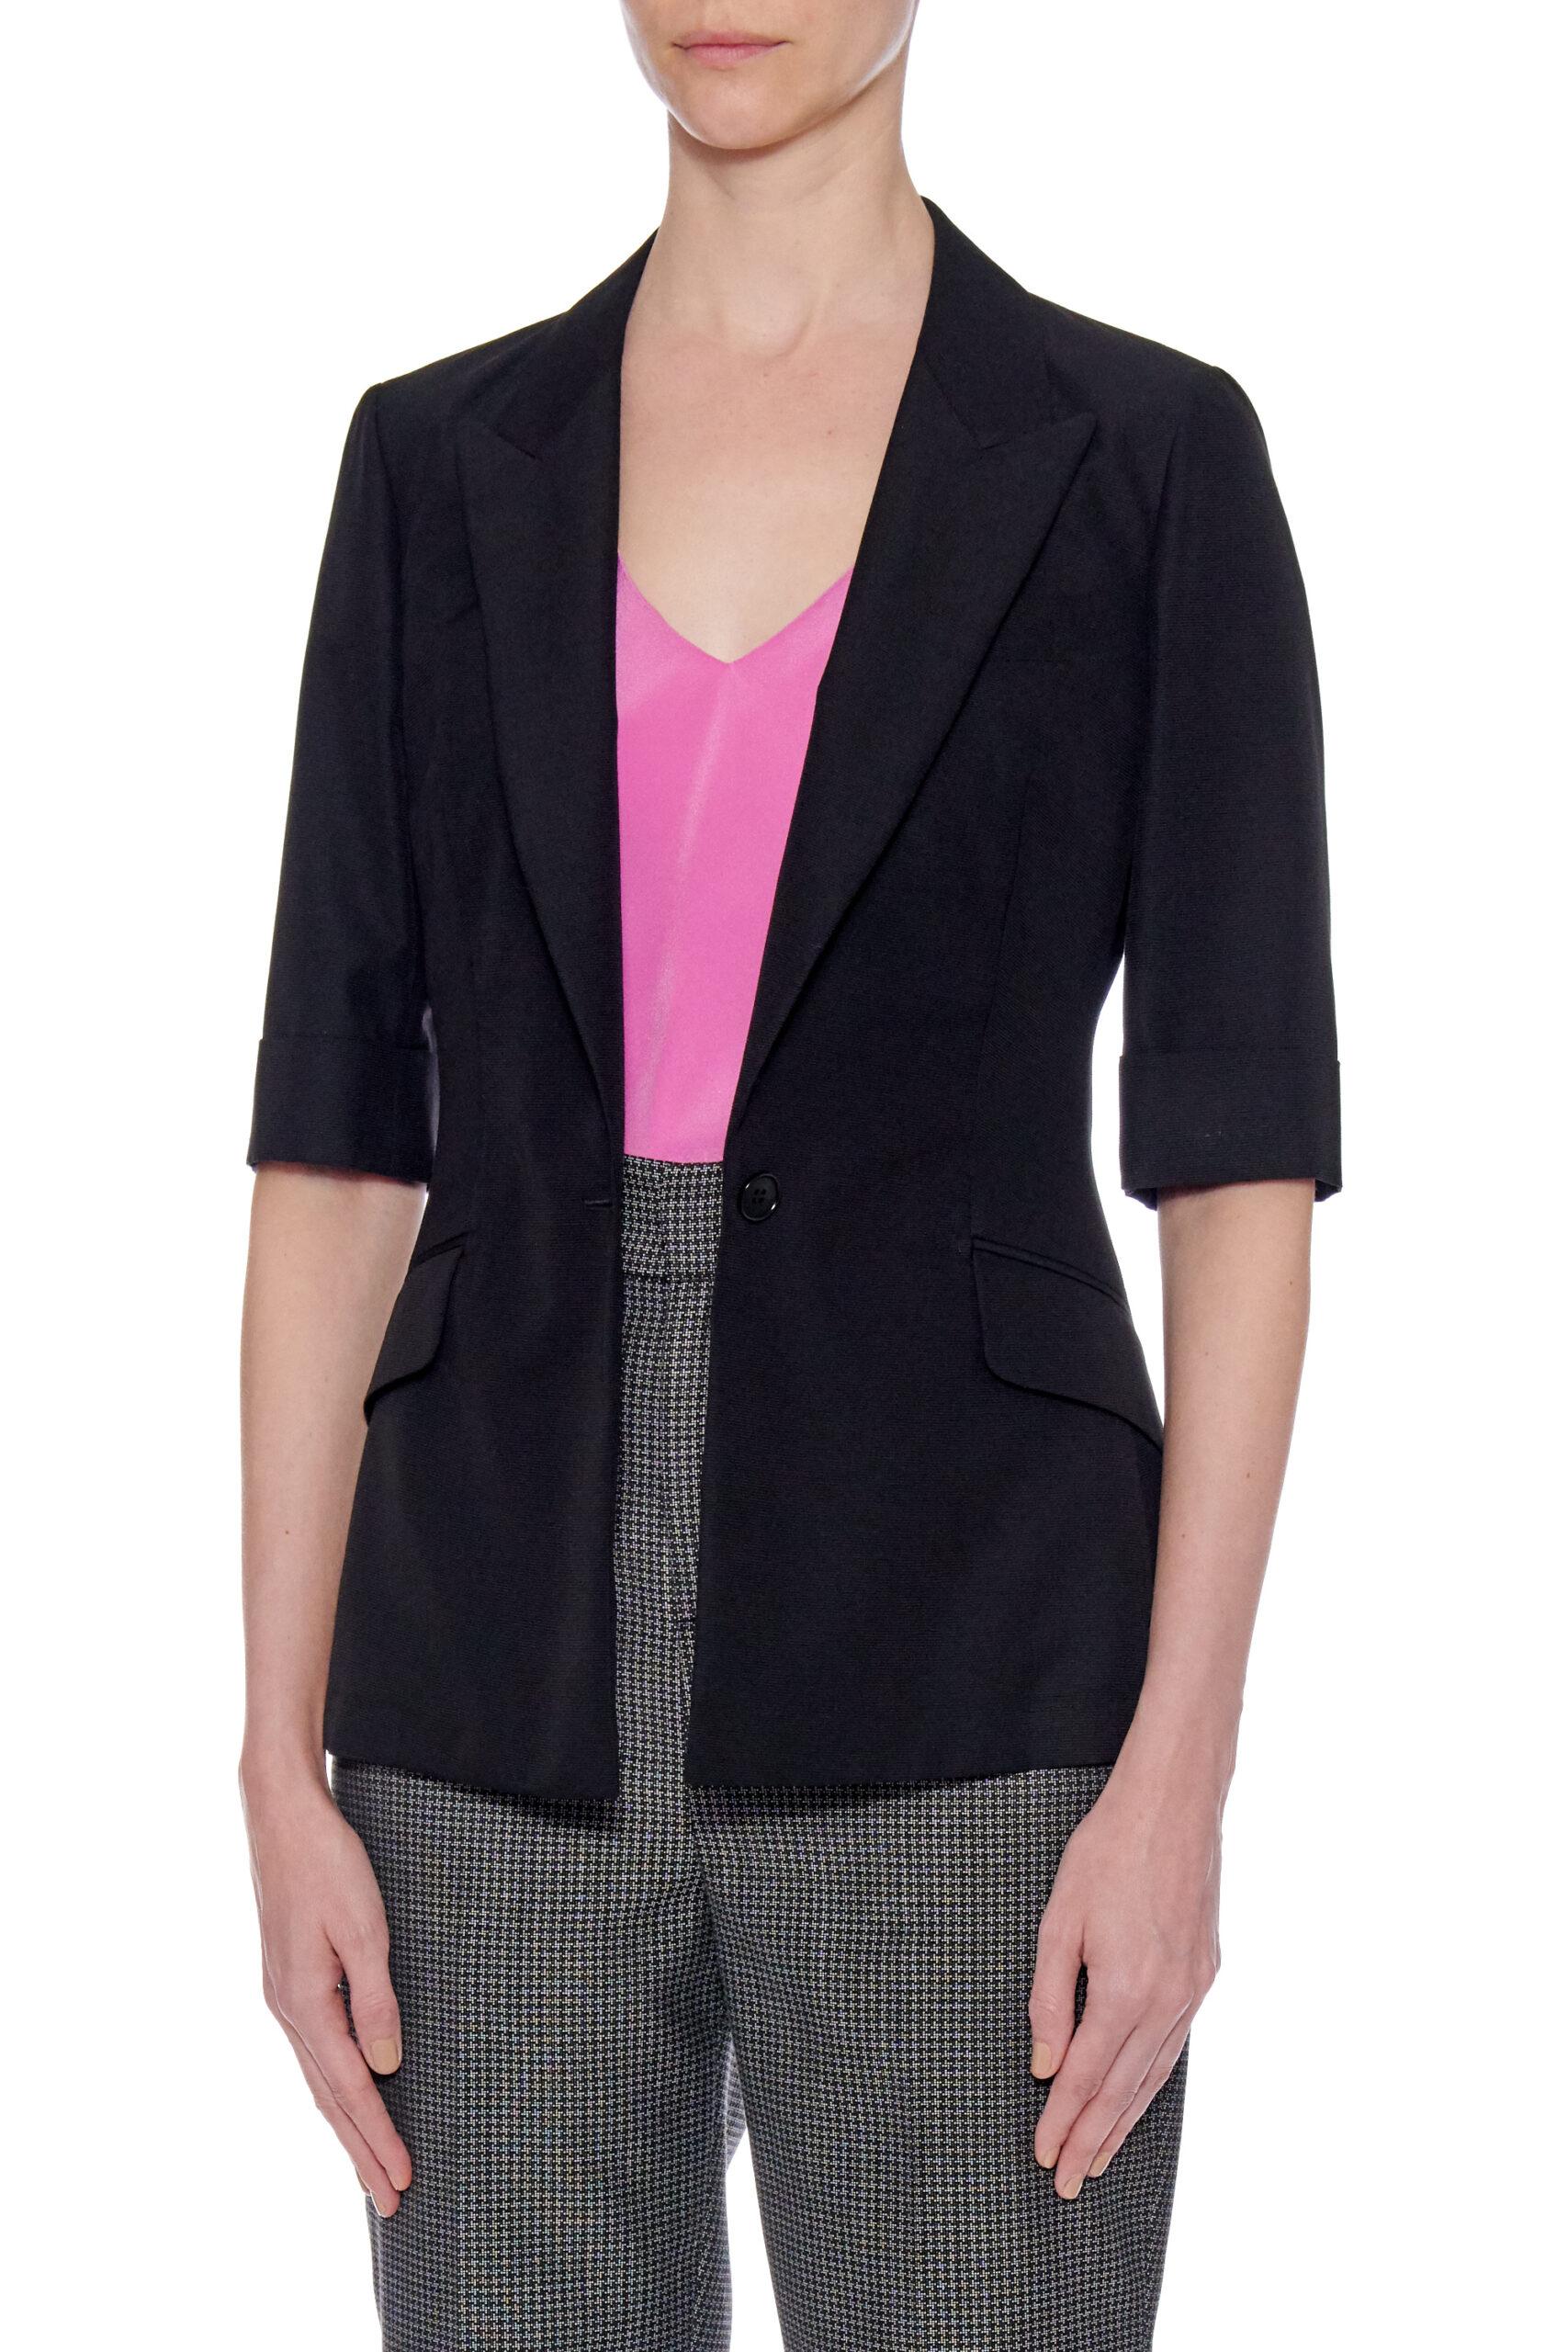 Huelva Jacket – Short sleeve, single-breasted summer jacket in black